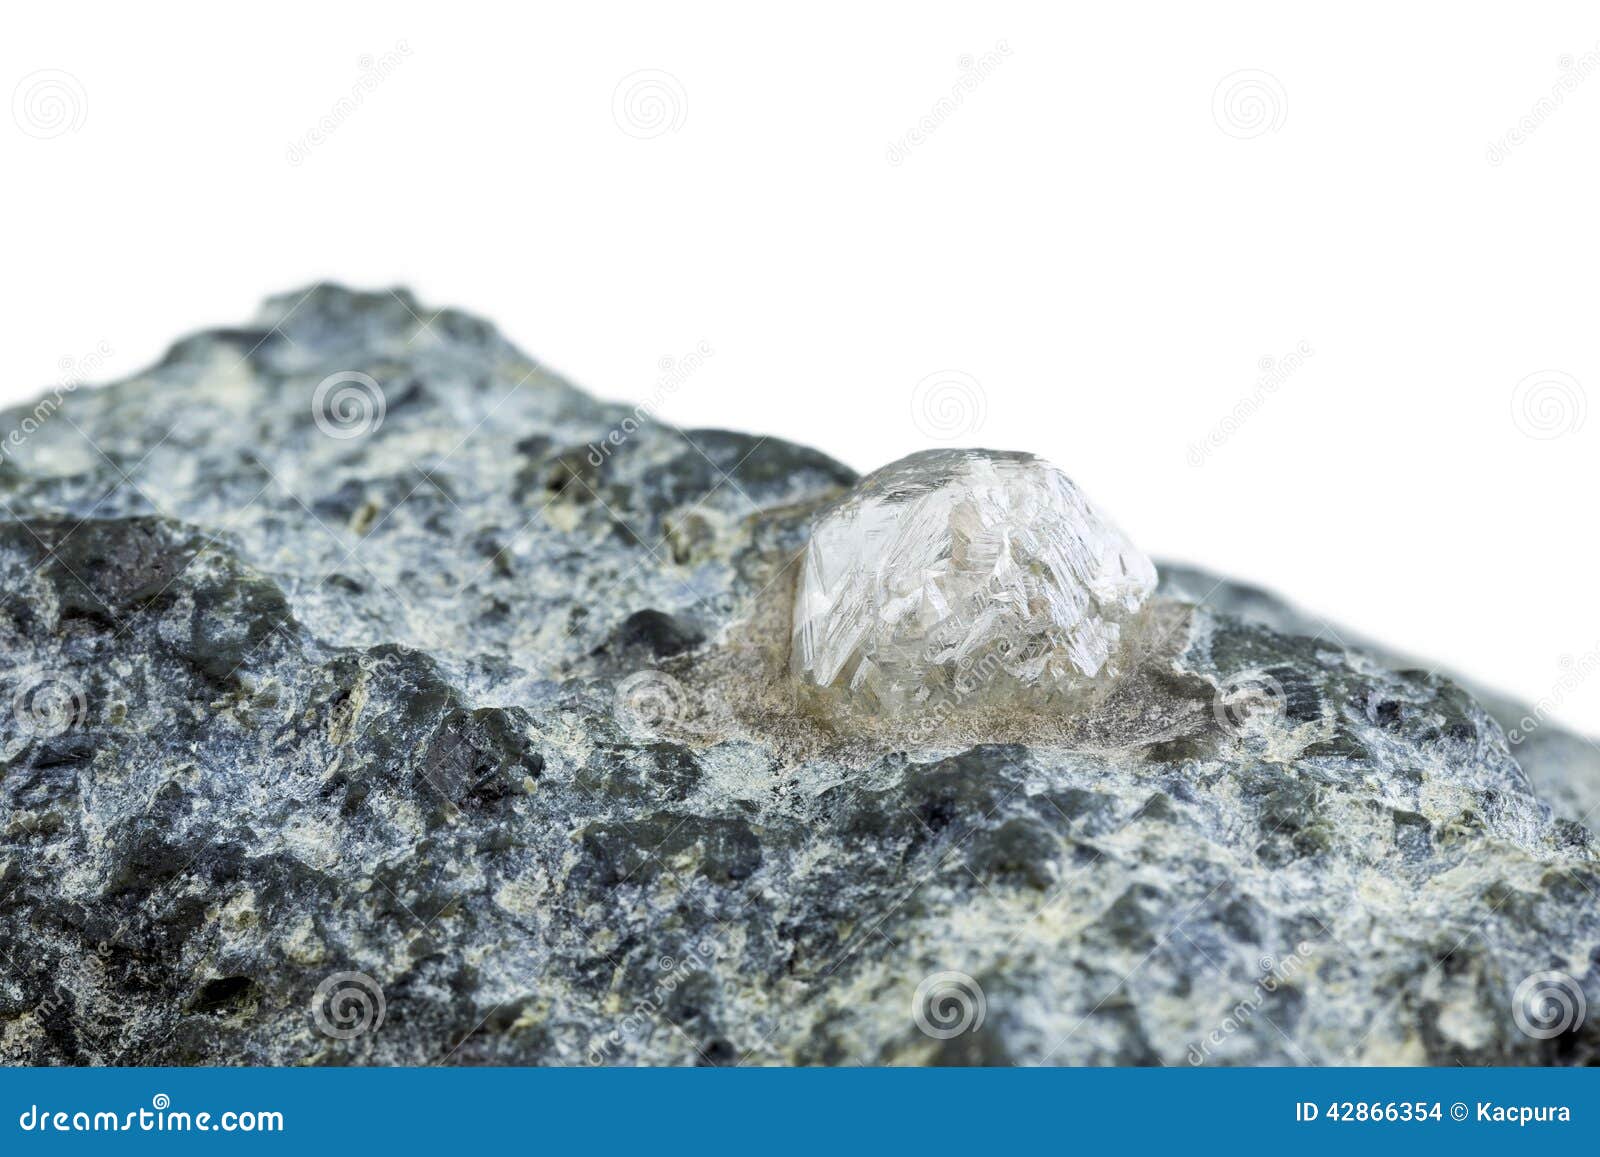 raw large rough diamond